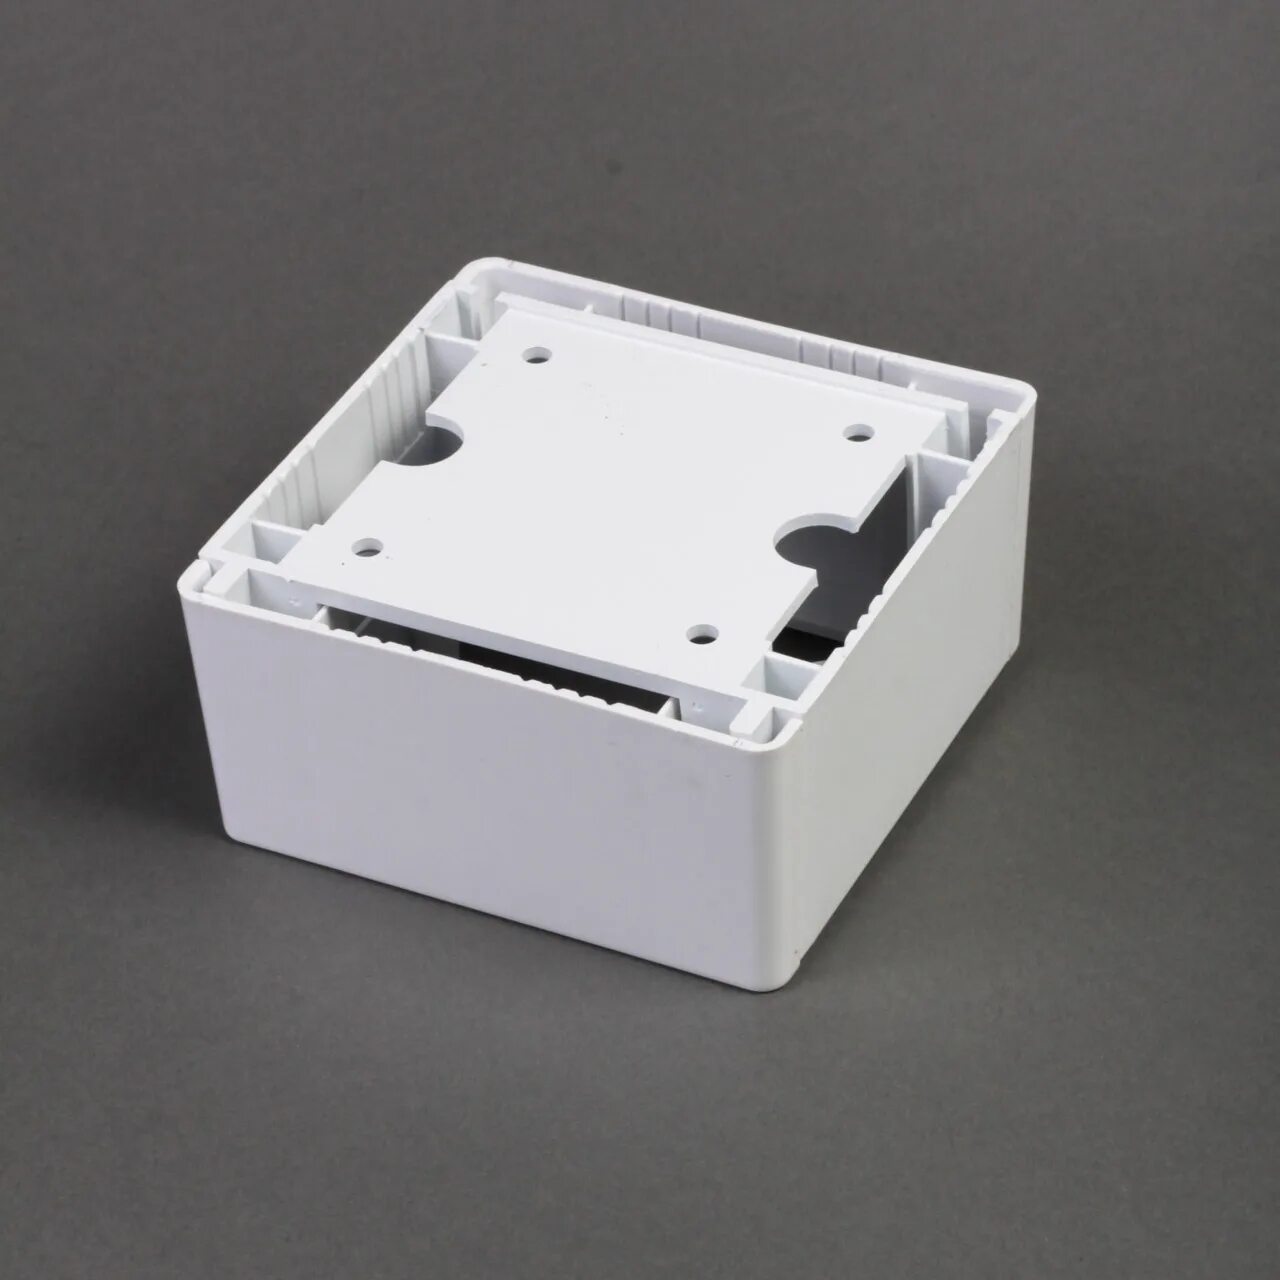 Распределительная коробка Ecoplast jbl090 (44055) наружный монтаж 90x42 мм. Коробка подъемная для наружного монтажа Легран. Коробка подъемная для наружного монтажа Шнайдер. Подъемная коробка Legrand Valena.